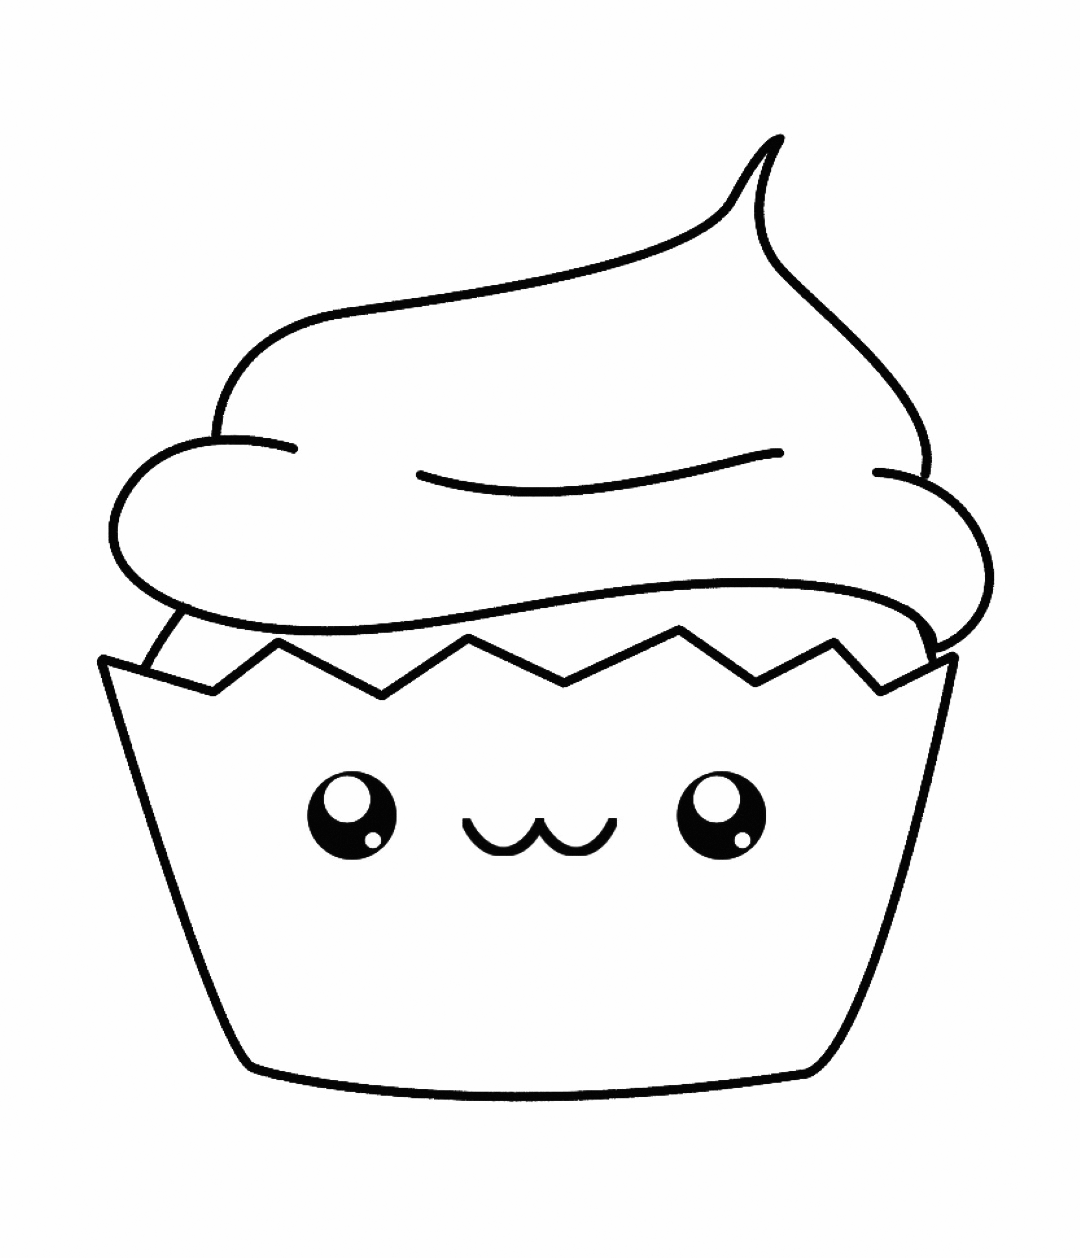 Kawaii Muffin Coloring Page